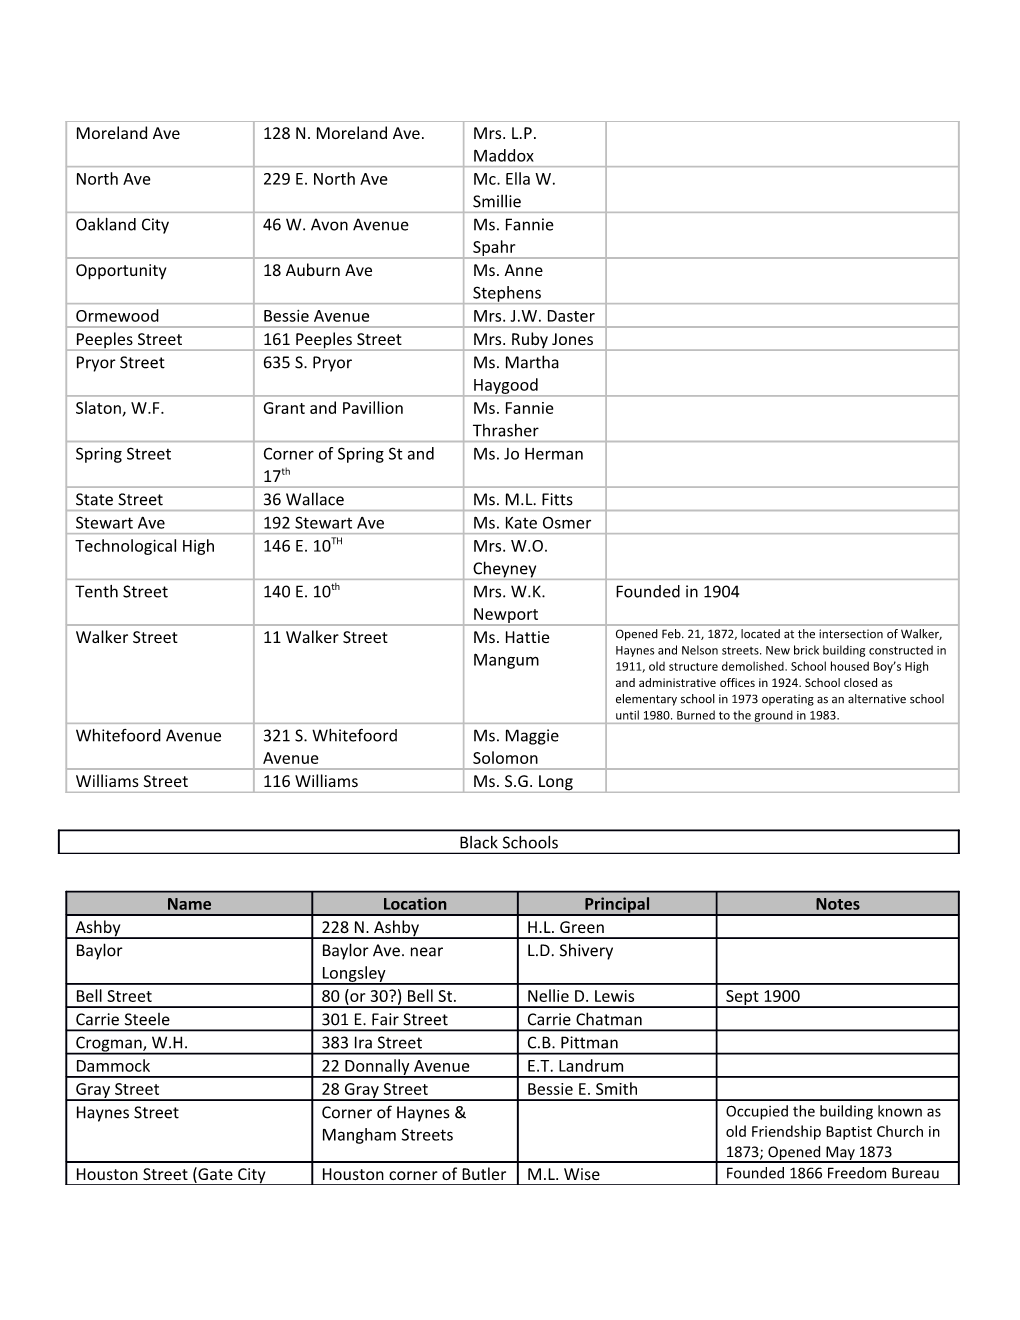 List of APS Schools According to the ATLANTA CITY DIRECTORY of 1923